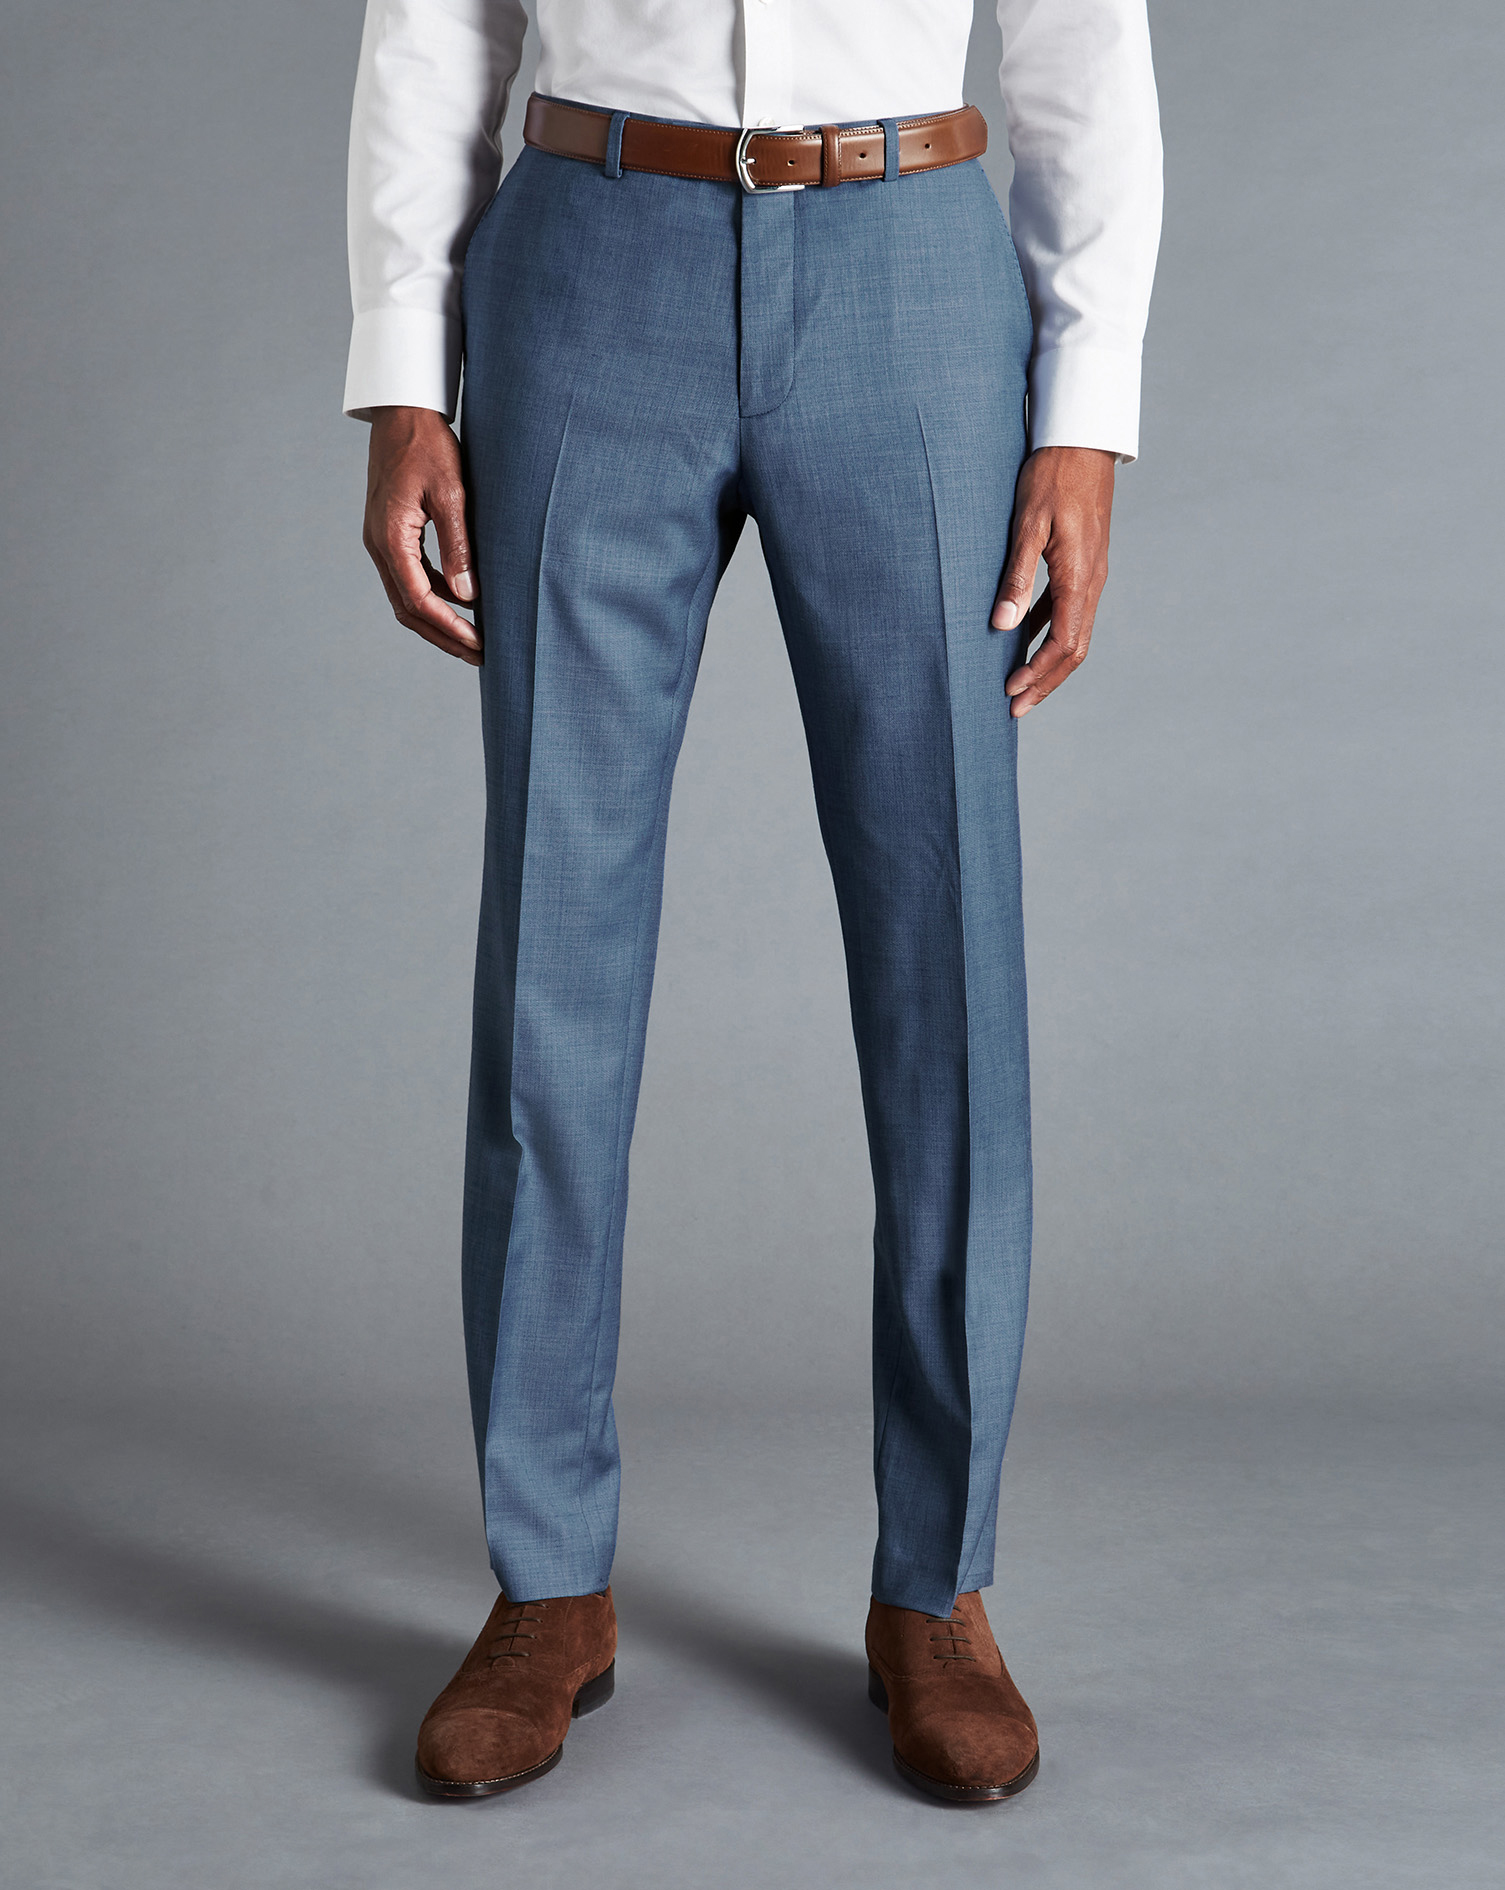 Men's Charles Tyrwhitt Sharkskin Suit Trousers - Cornflower Blue Size 30/38 Wool
